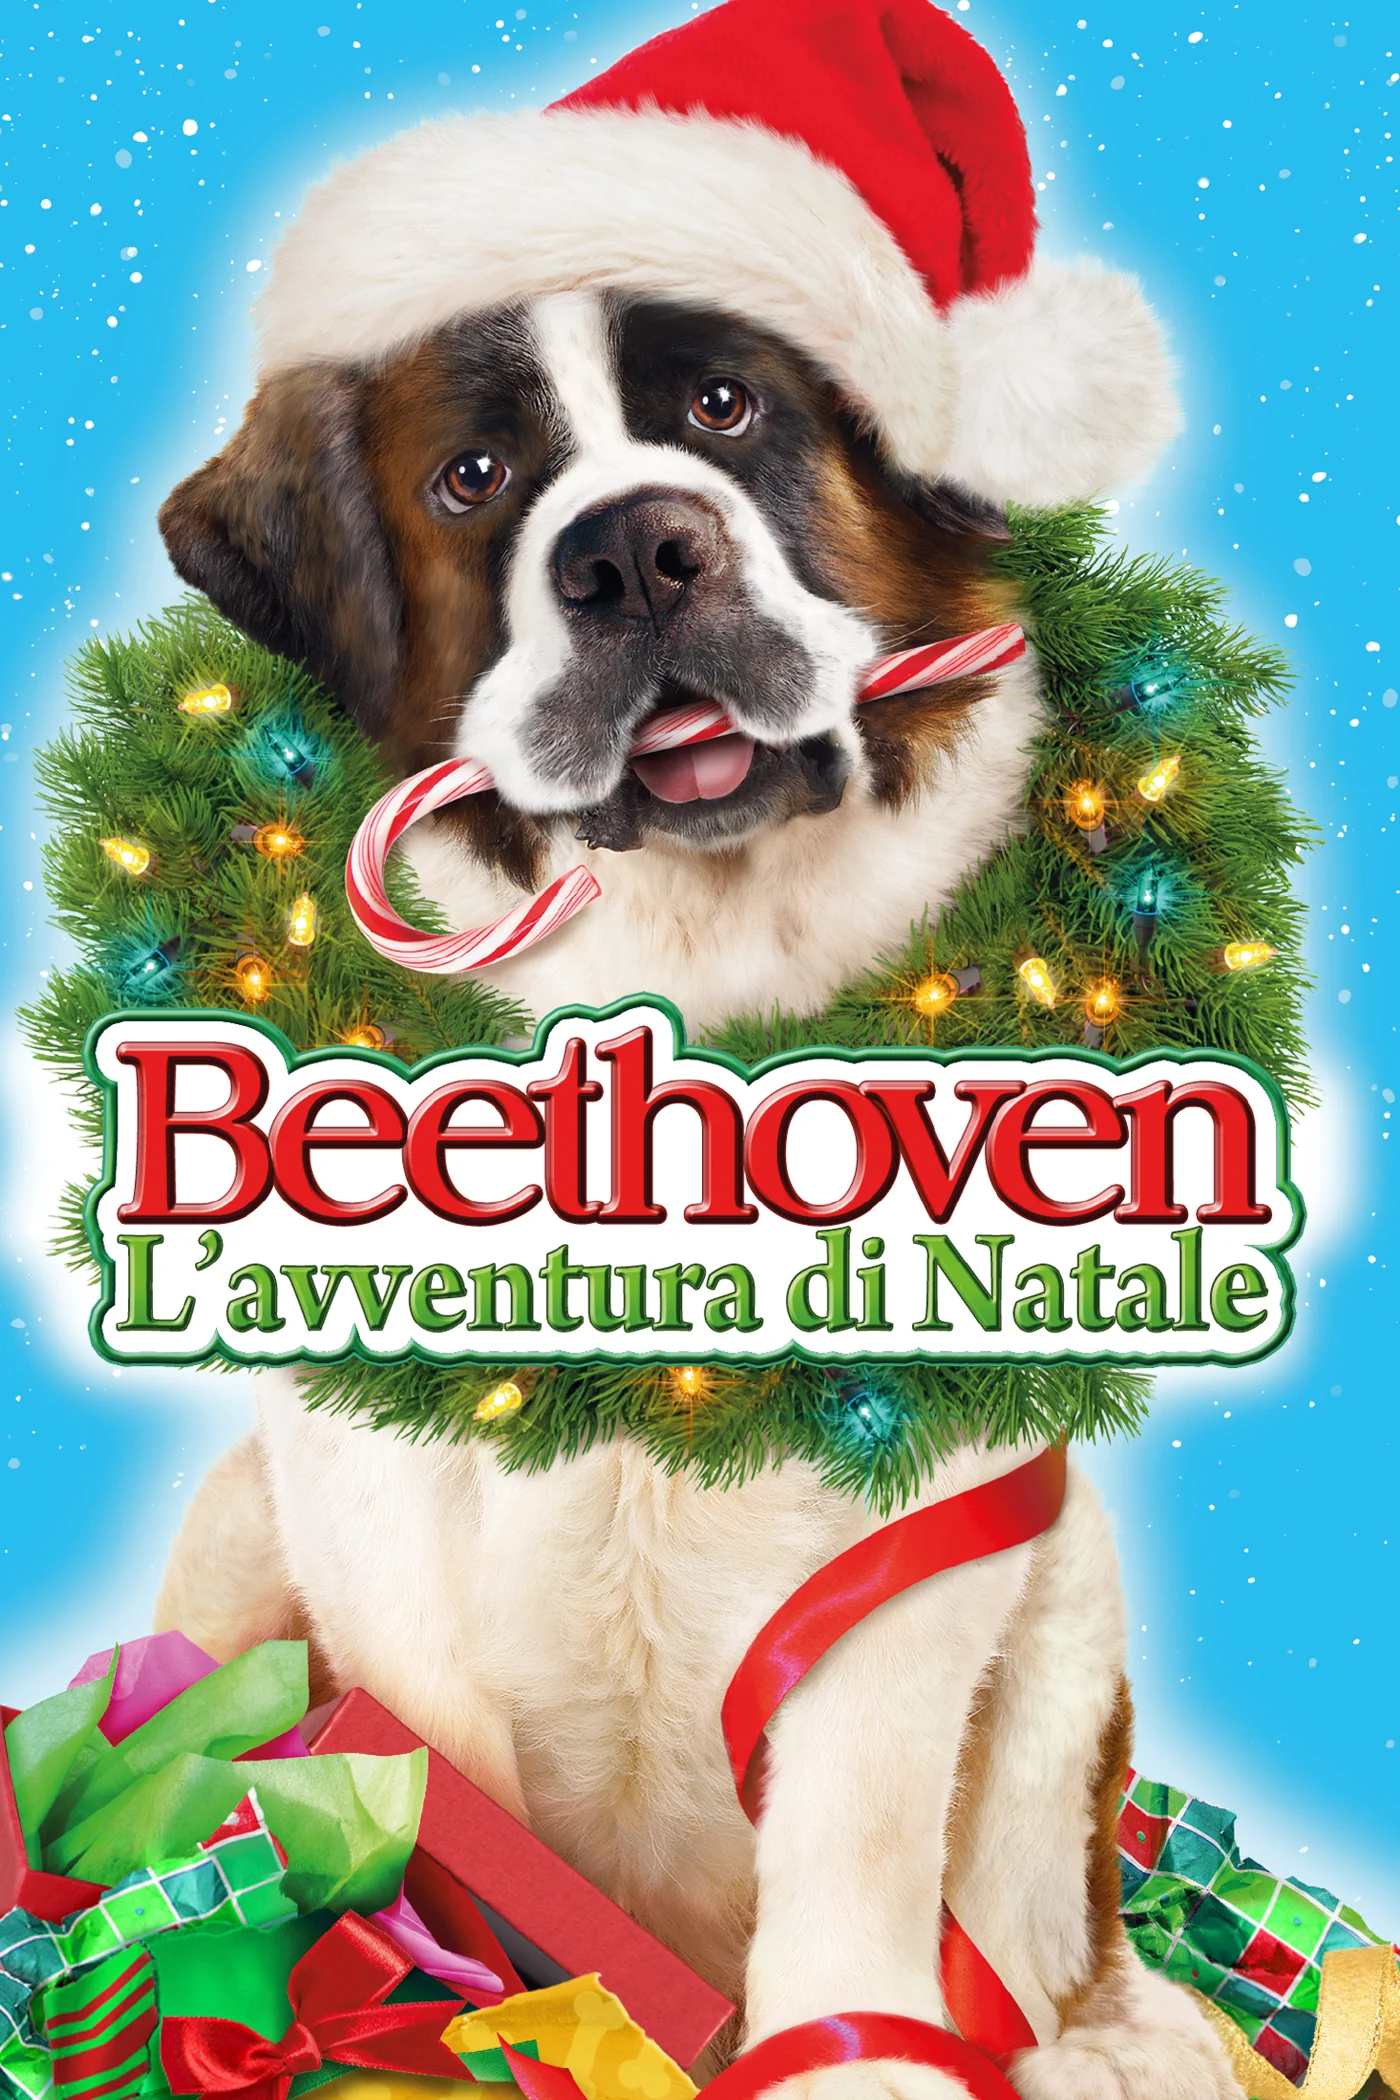 Beethoven – L’avventura di Natale [HD] (2011)